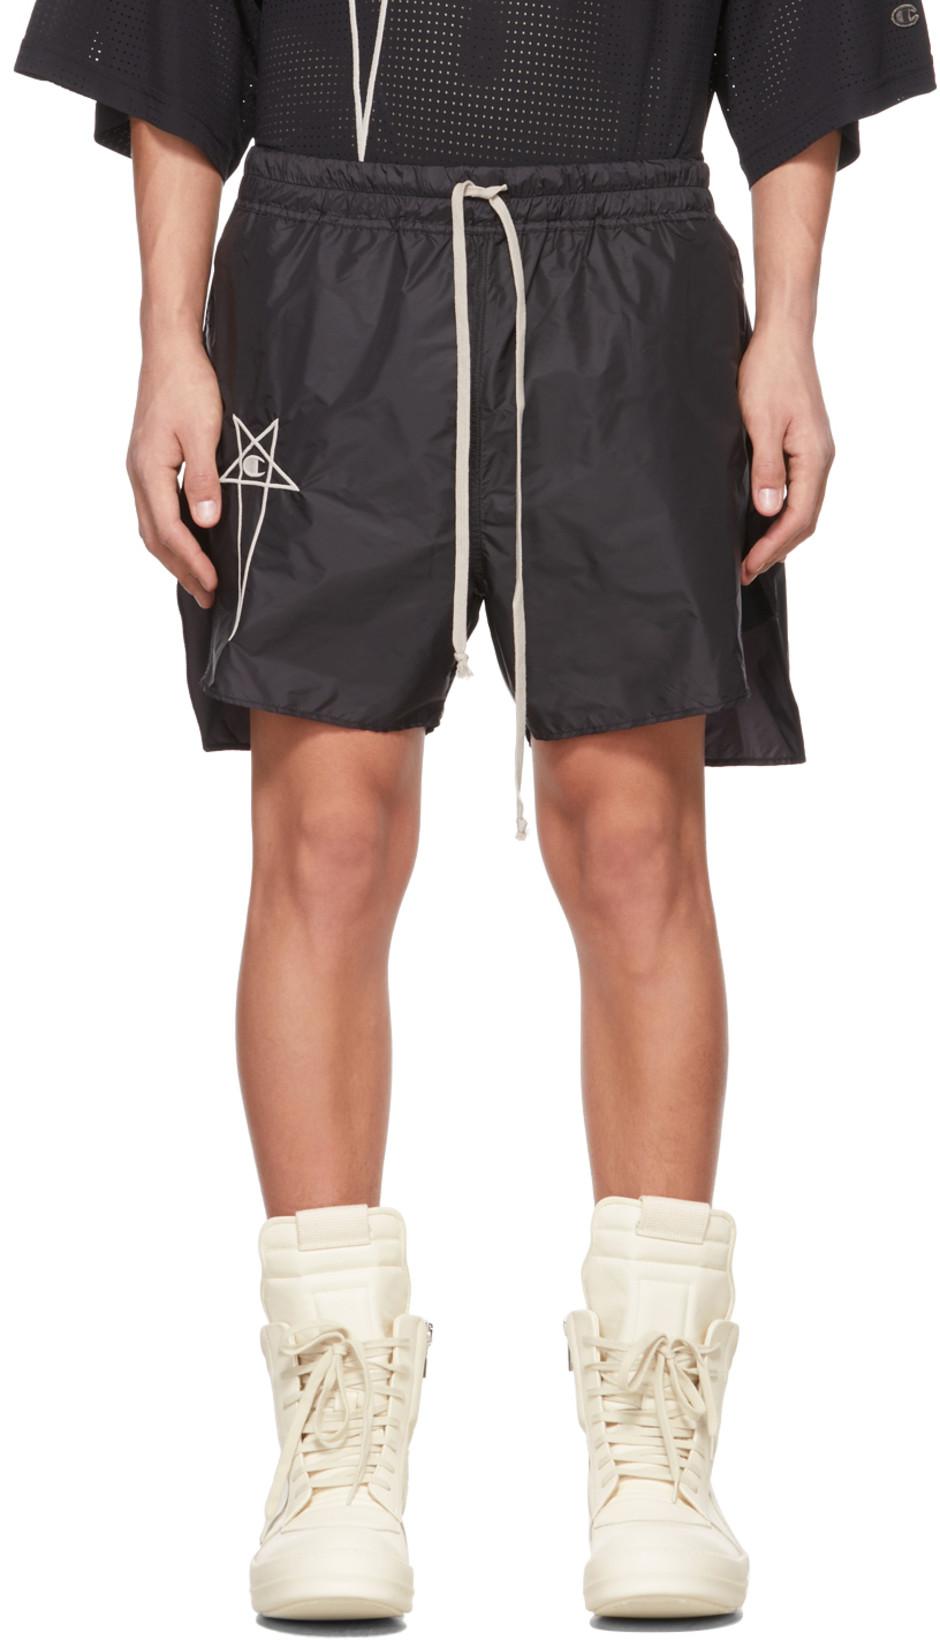 Rick Owens Synthetic Black Champion Edition Mesh Dolphin Boxers Shorts for Men Mens Clothing Shorts Casual shorts 